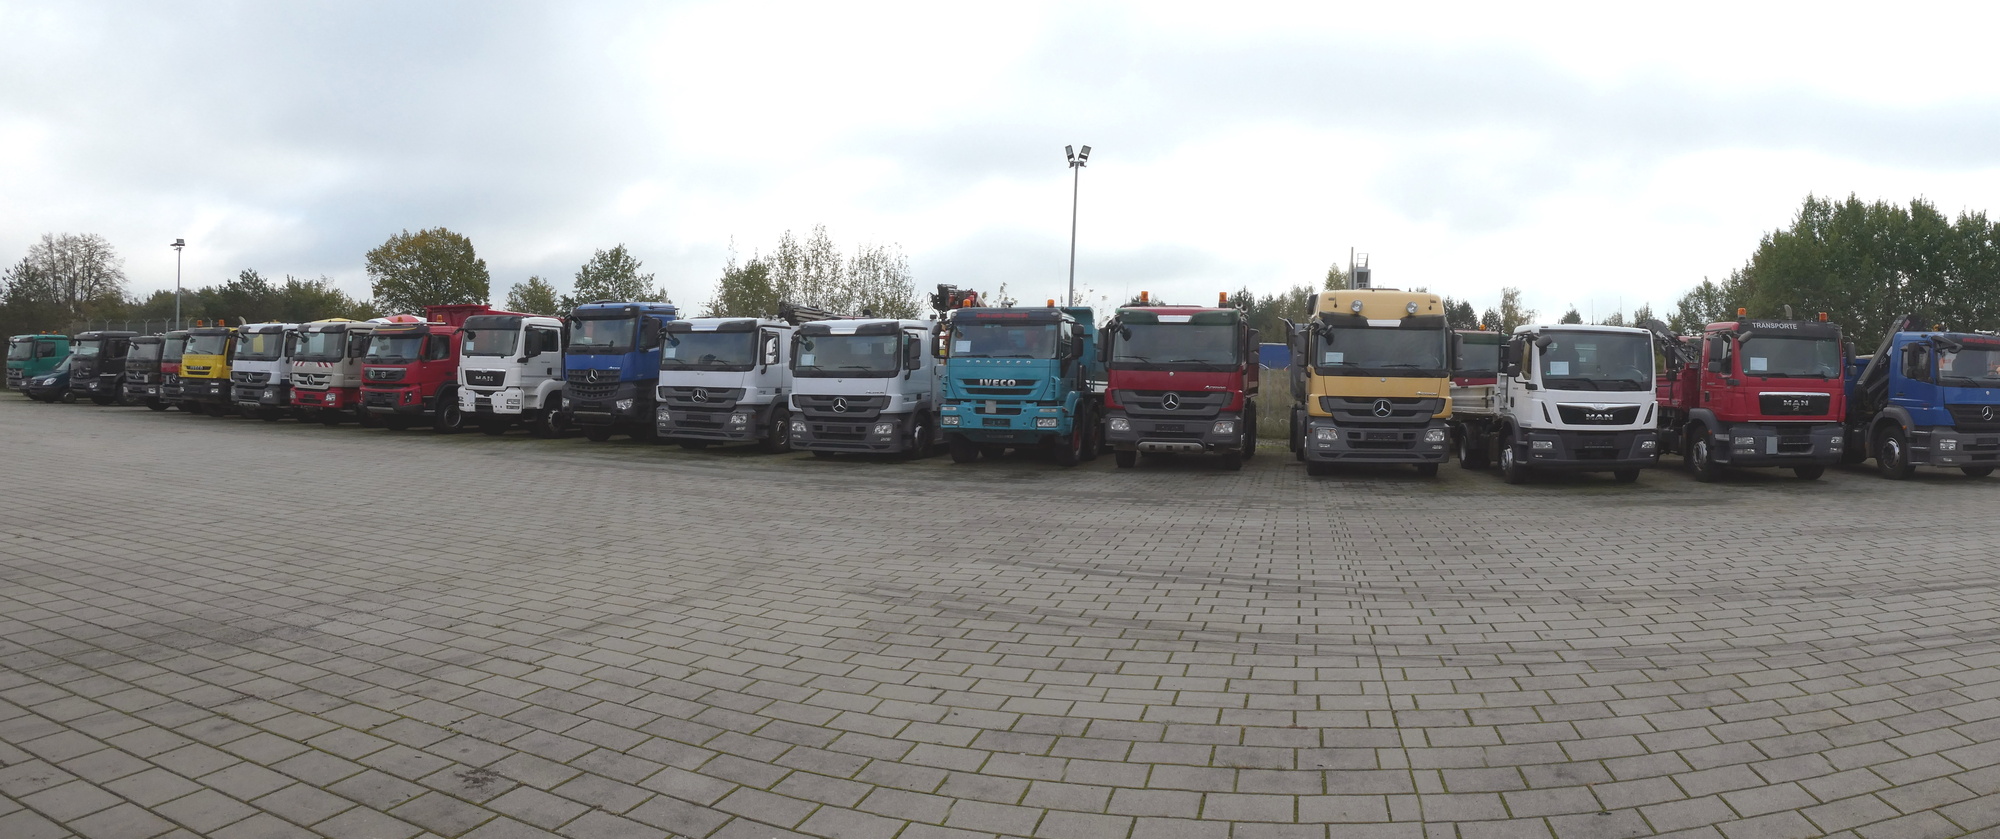 Henze Truck GmbH - Semi-trailers undefined: picture 1